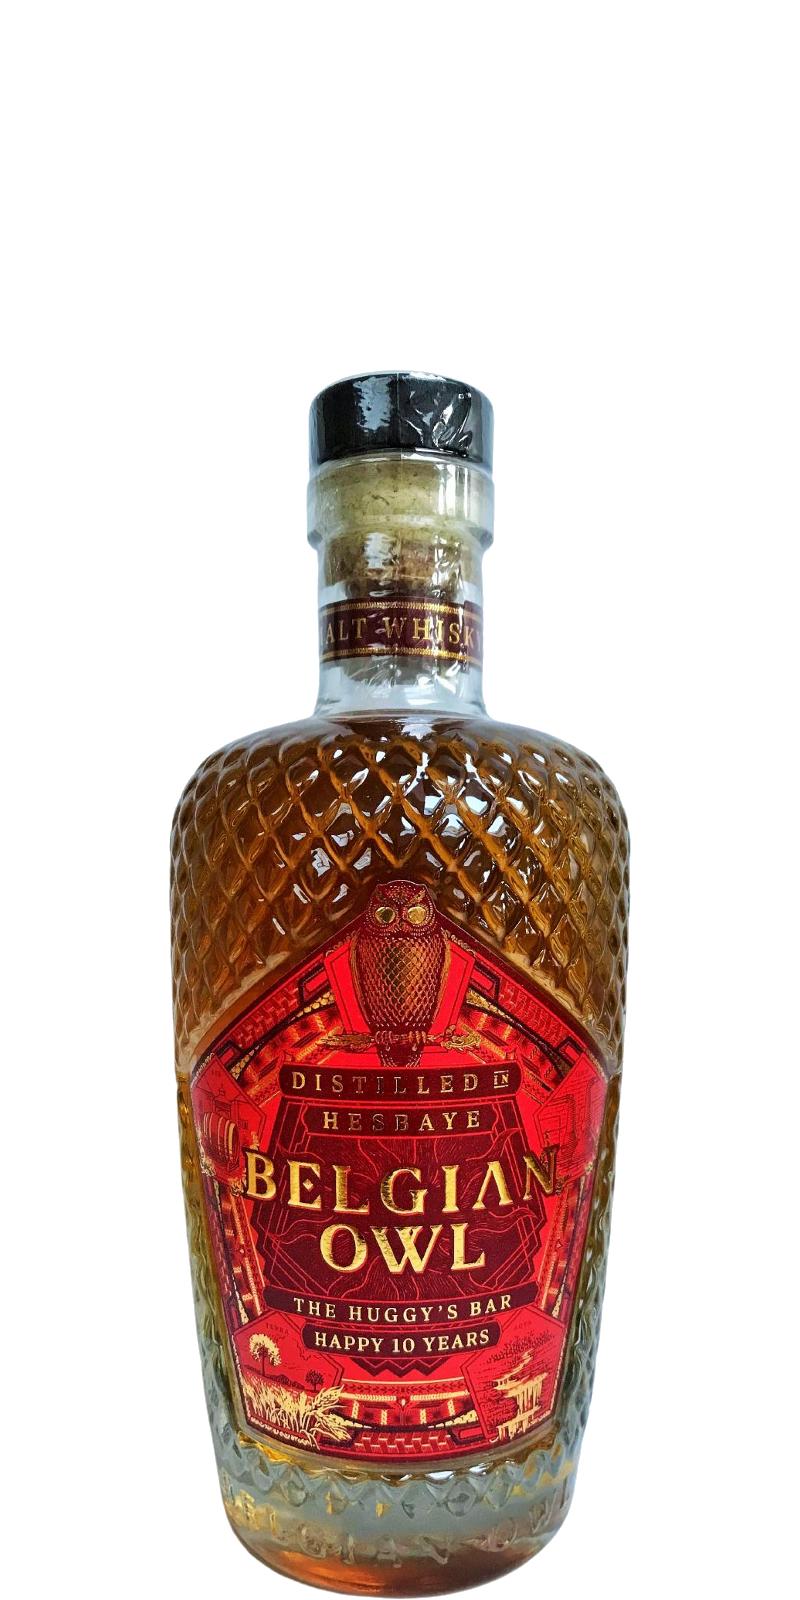 The Belgian Owl 59 Months 1st Fill Bourbon The Huggy's Bar 10th Anniversary 46% 500ml